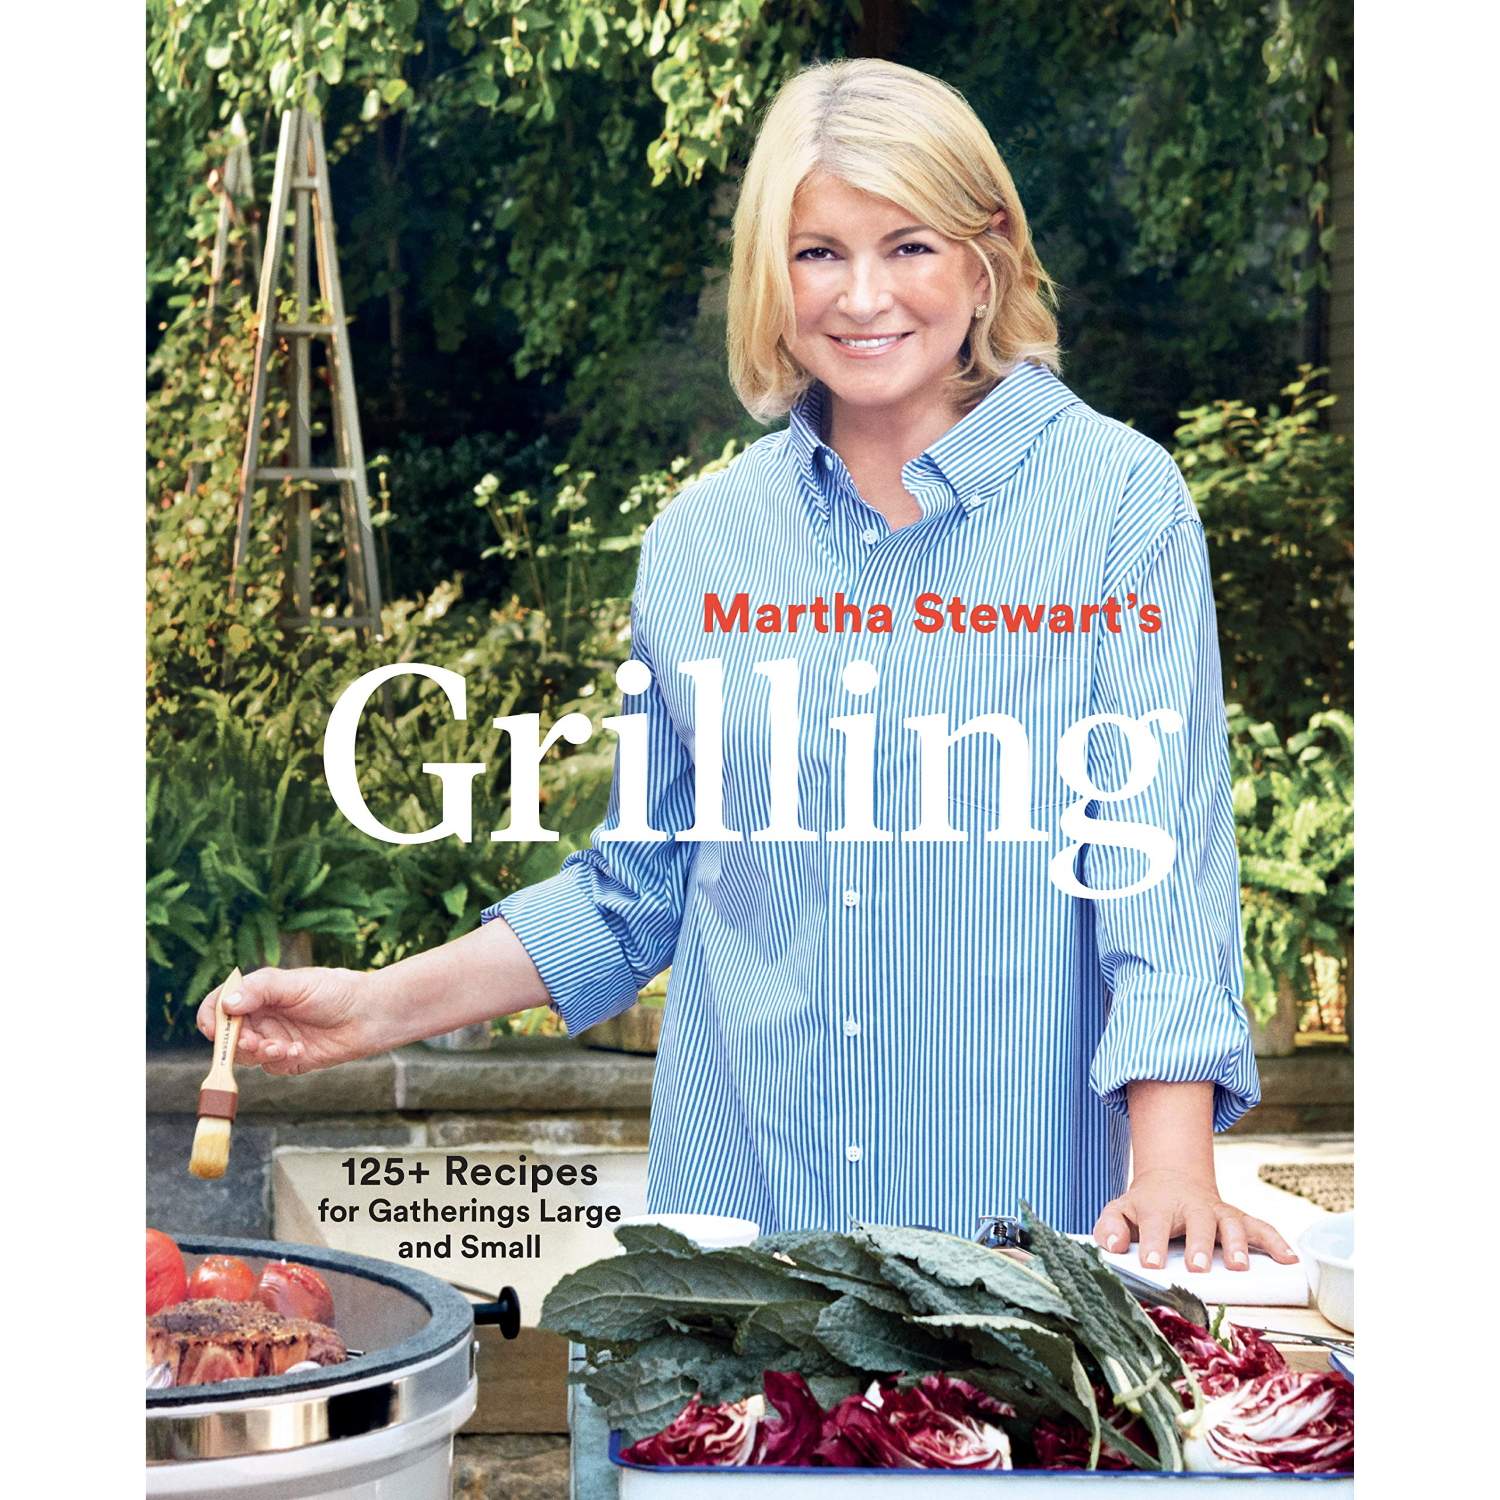 Martha Stewart's Grilling